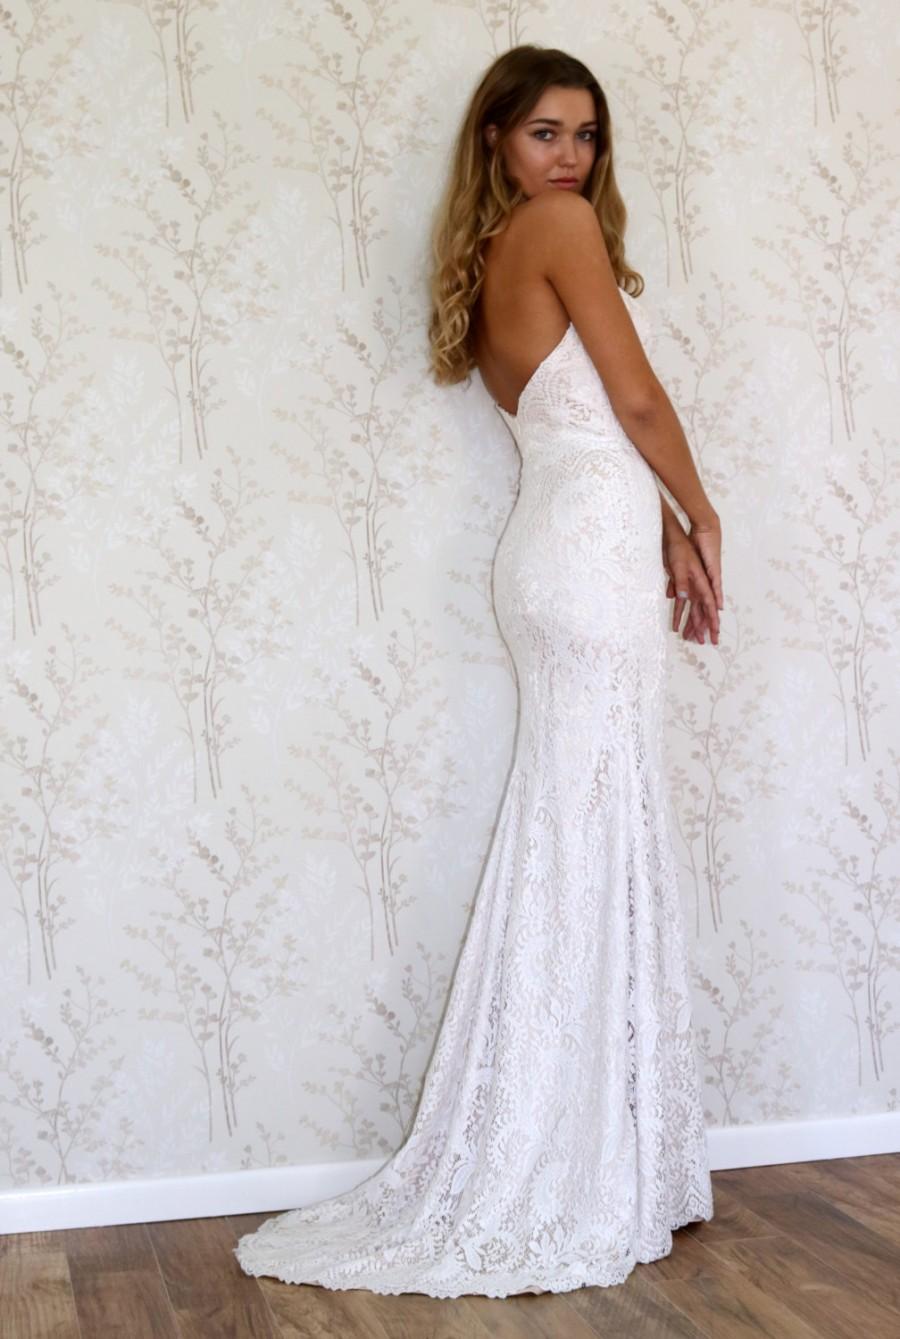 Wedding - Lace Wedding dress/Simple bohemian style wedding gown/Strapless sweetheart neckline wedding dress.